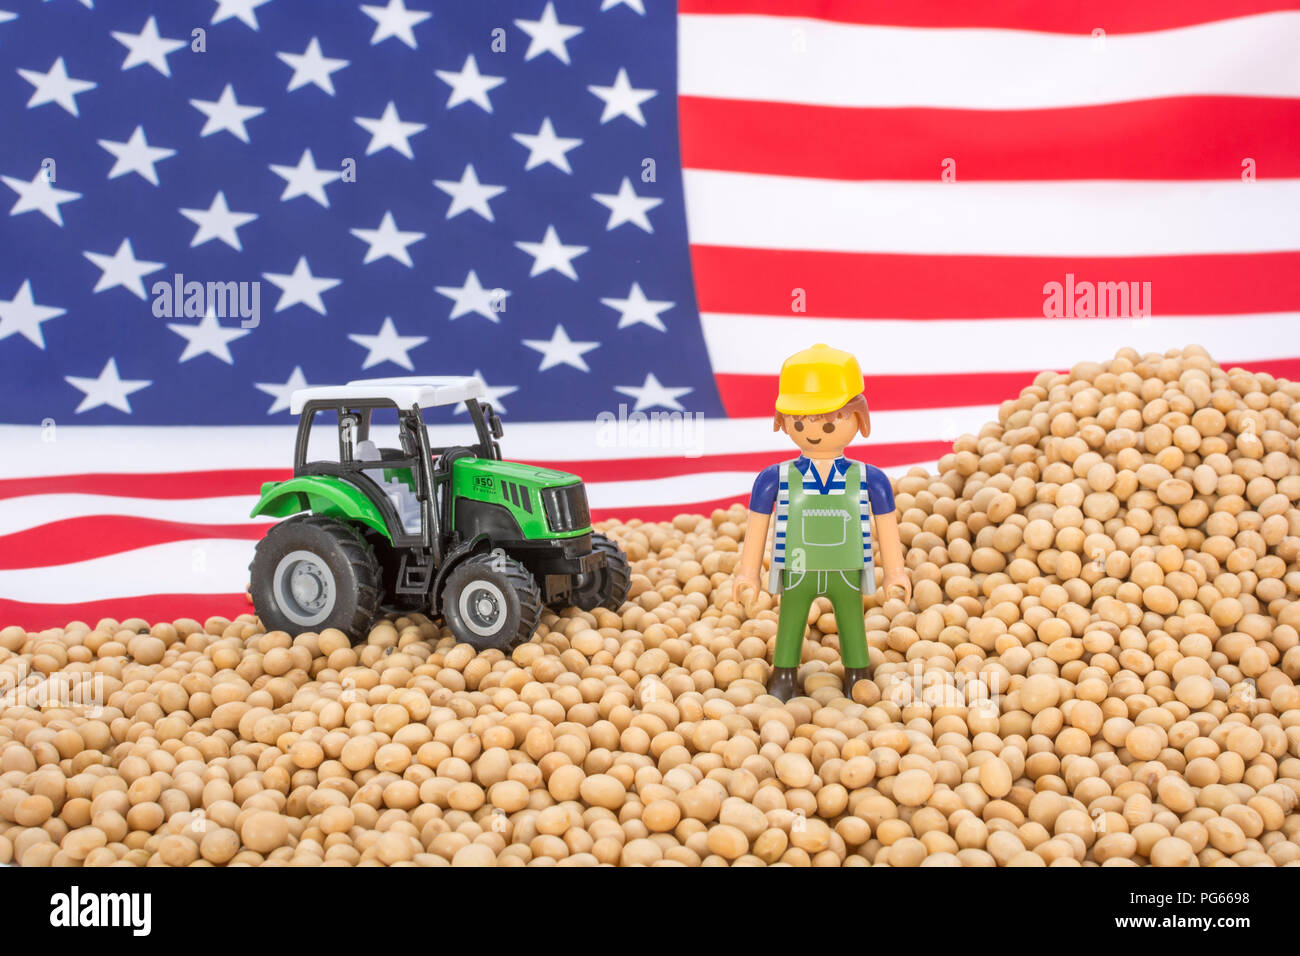 Amerikanische Flagge mit Blocklagerung Sojabohnen. Metapher US-China trade Krieg, China trade Tarife, US-Sojabohnen Landwirtschaft, amerikanische Landwirte, Soja Ware Stockfoto